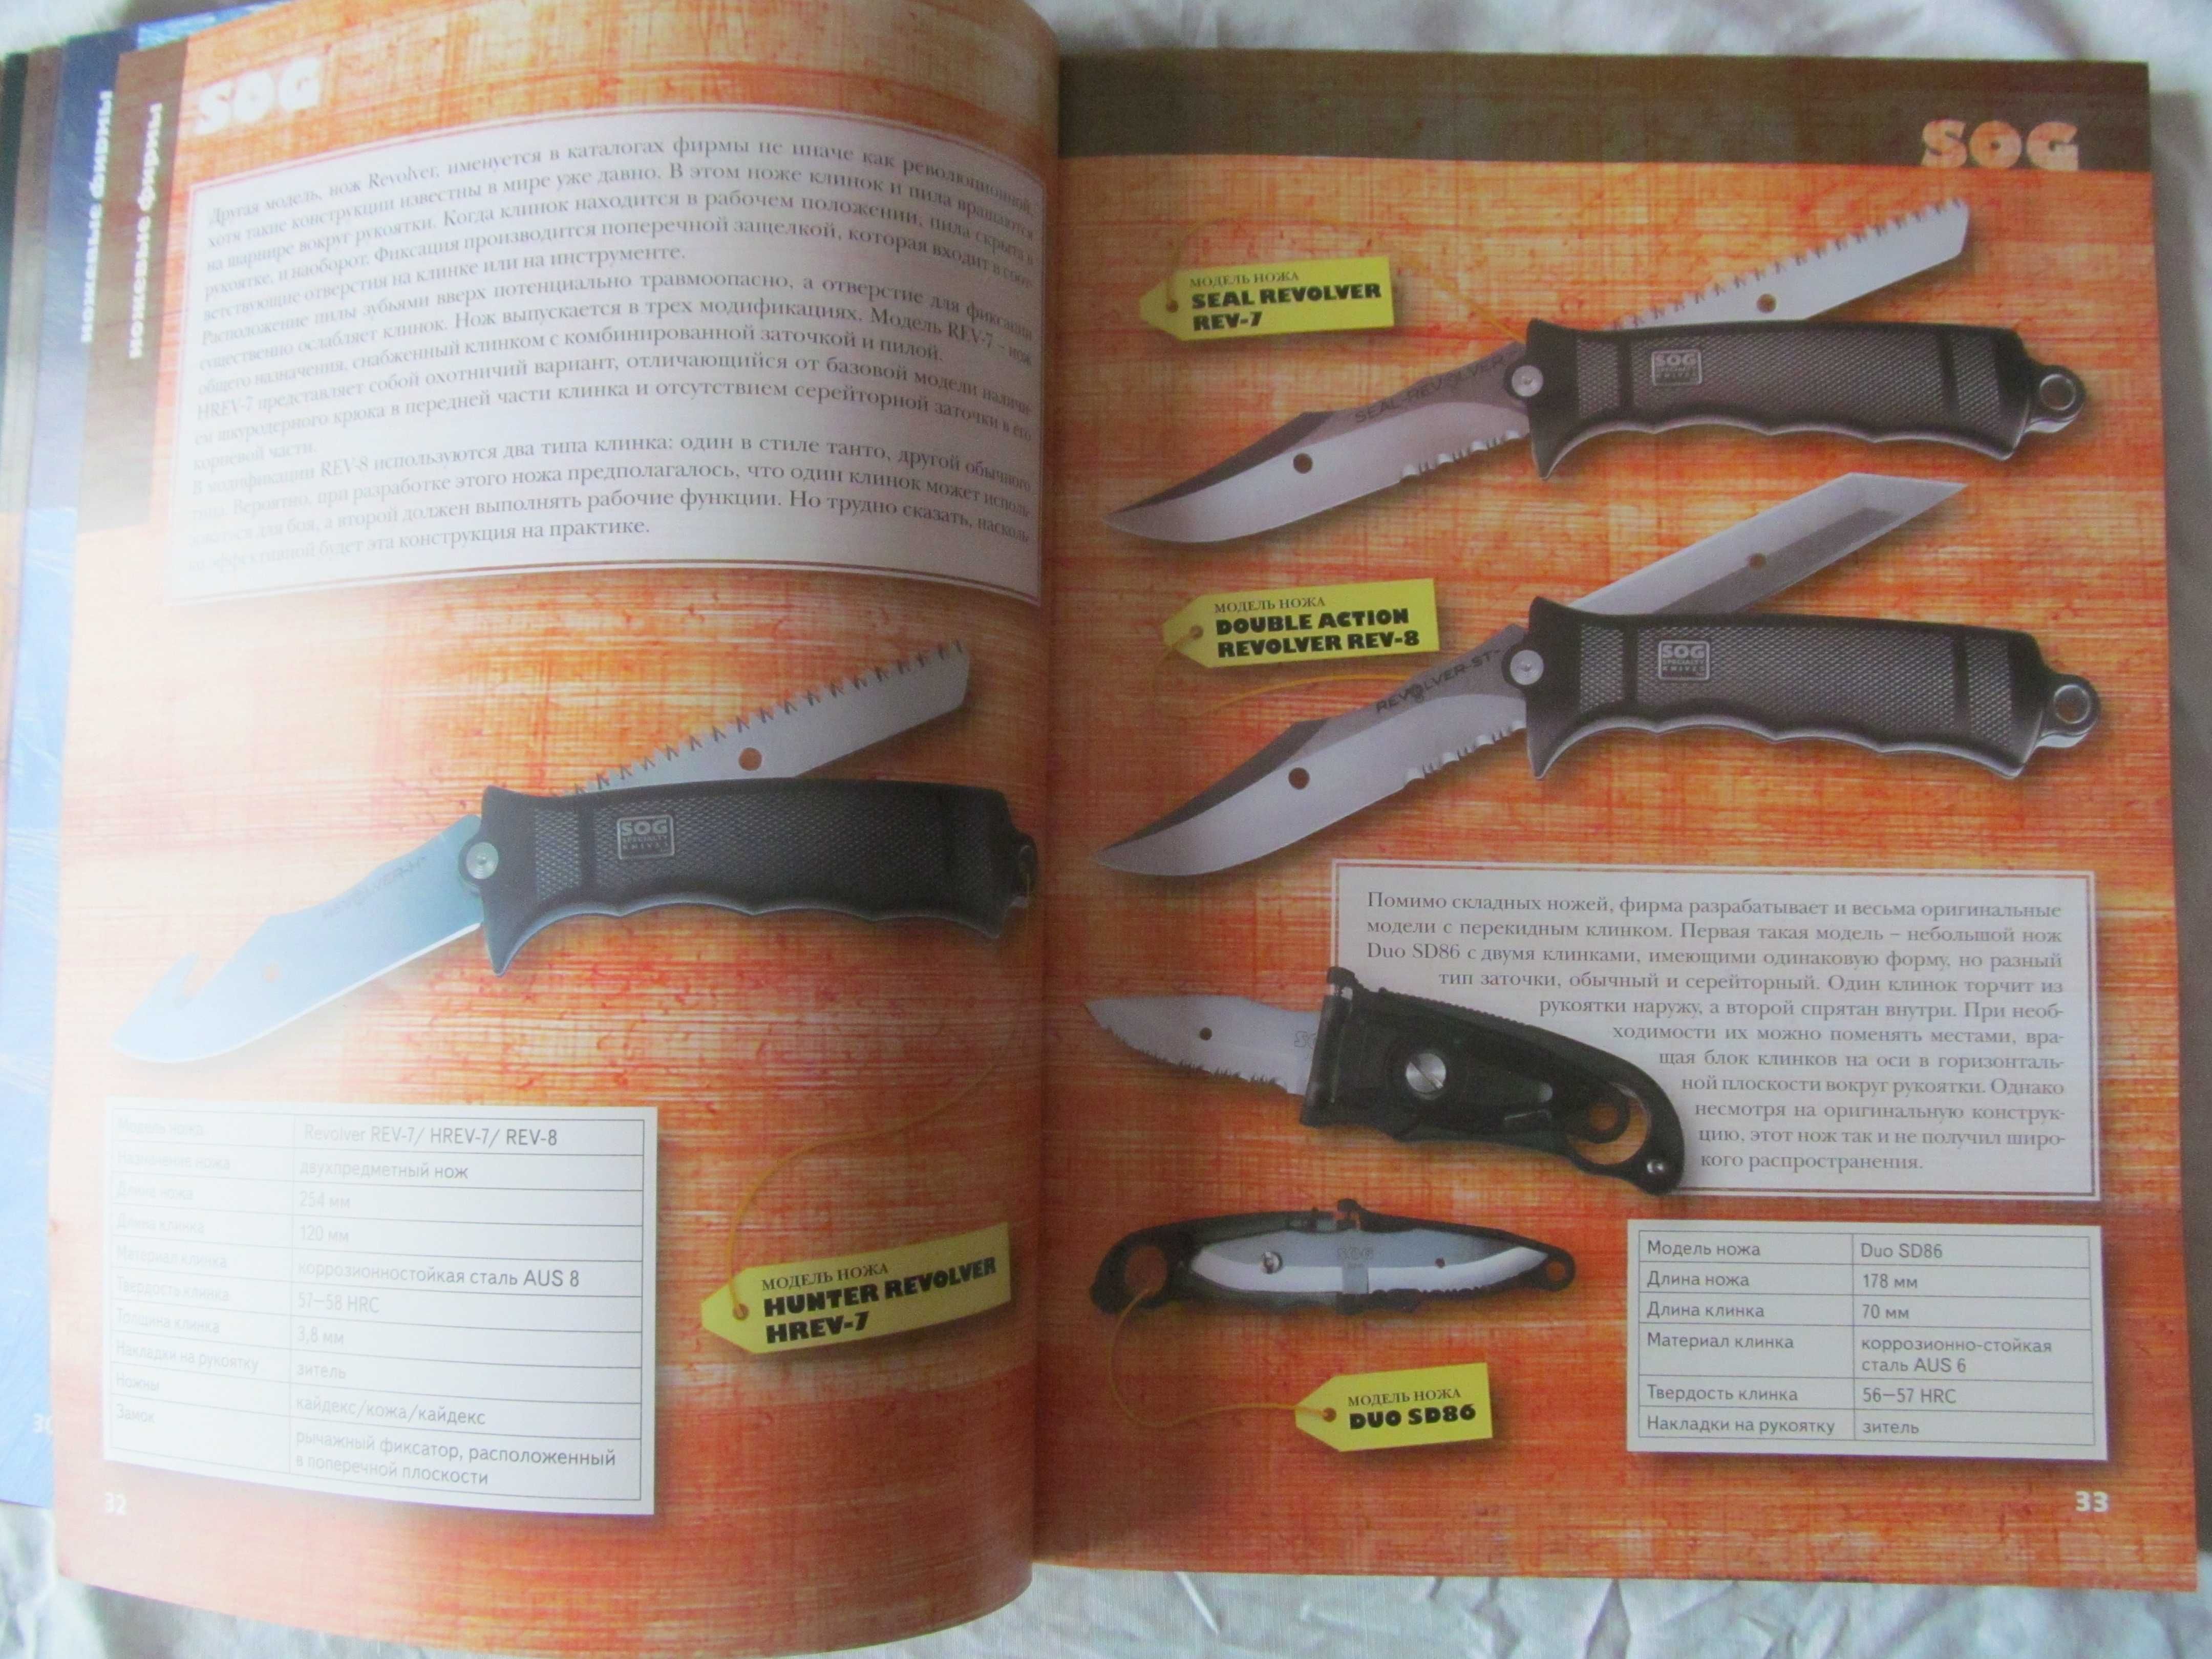 Каталог ножей 2008 года